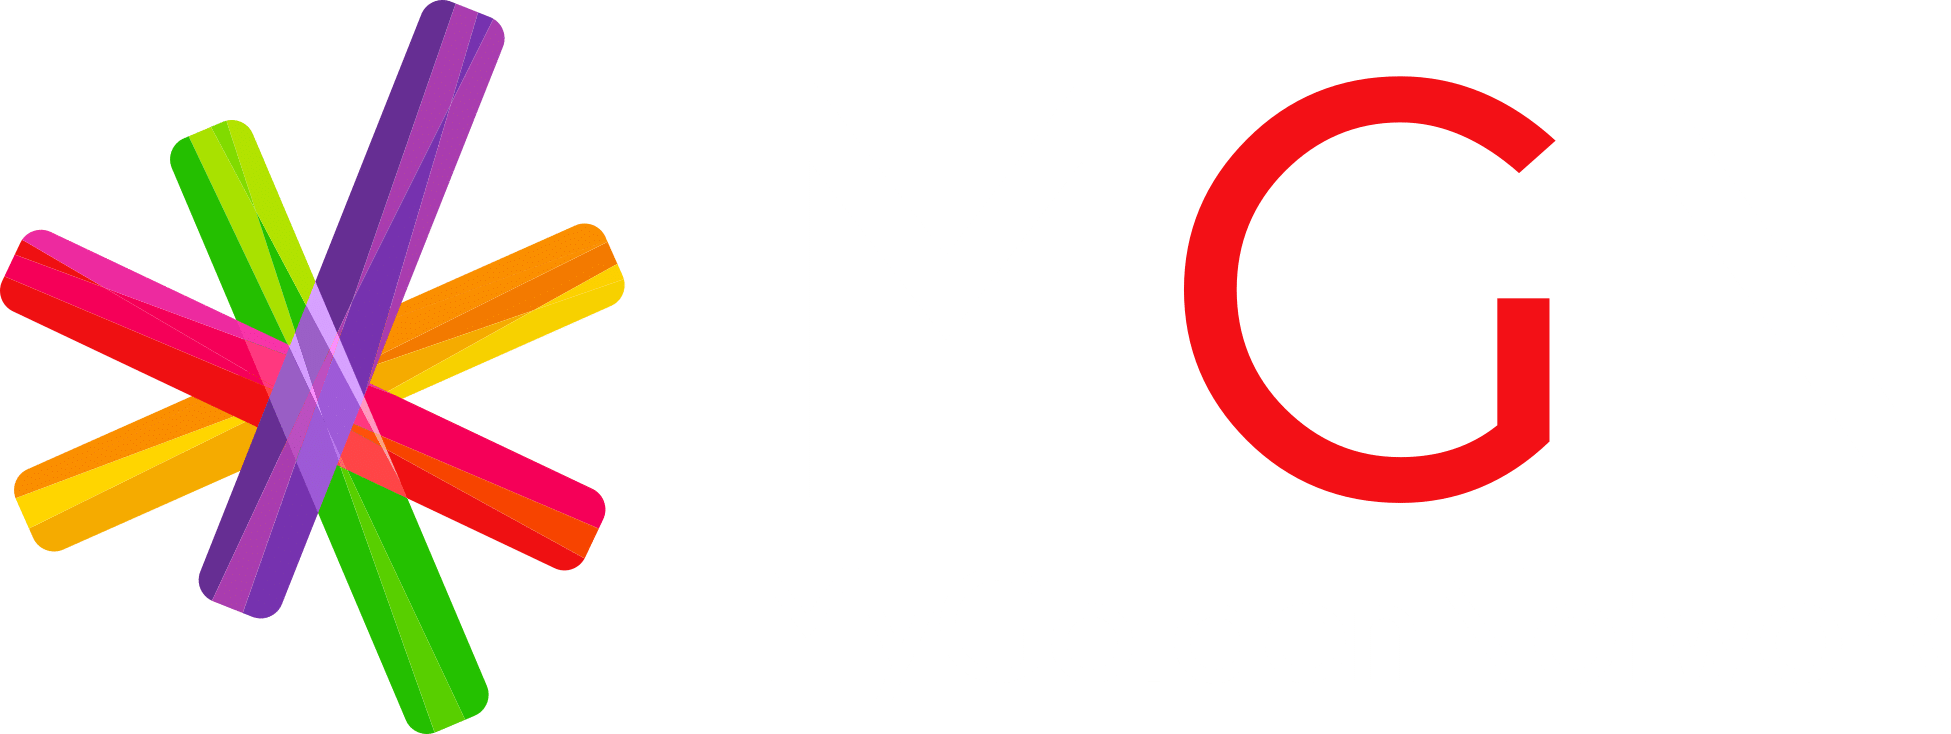 MyGoldenNetwork